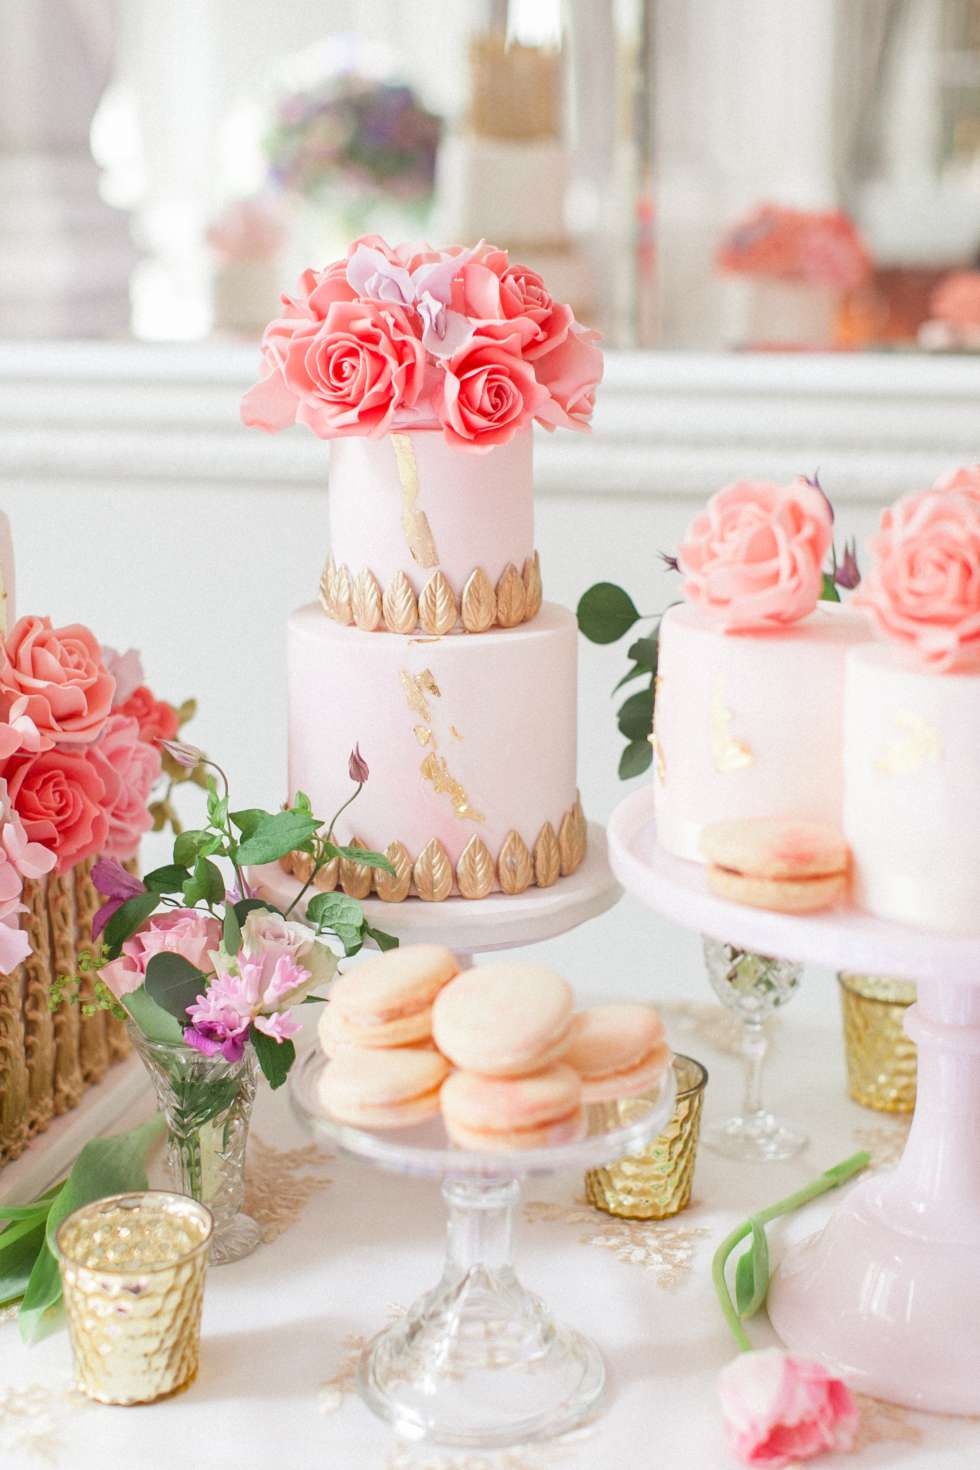 Mini Wedding Cakes and Macarons